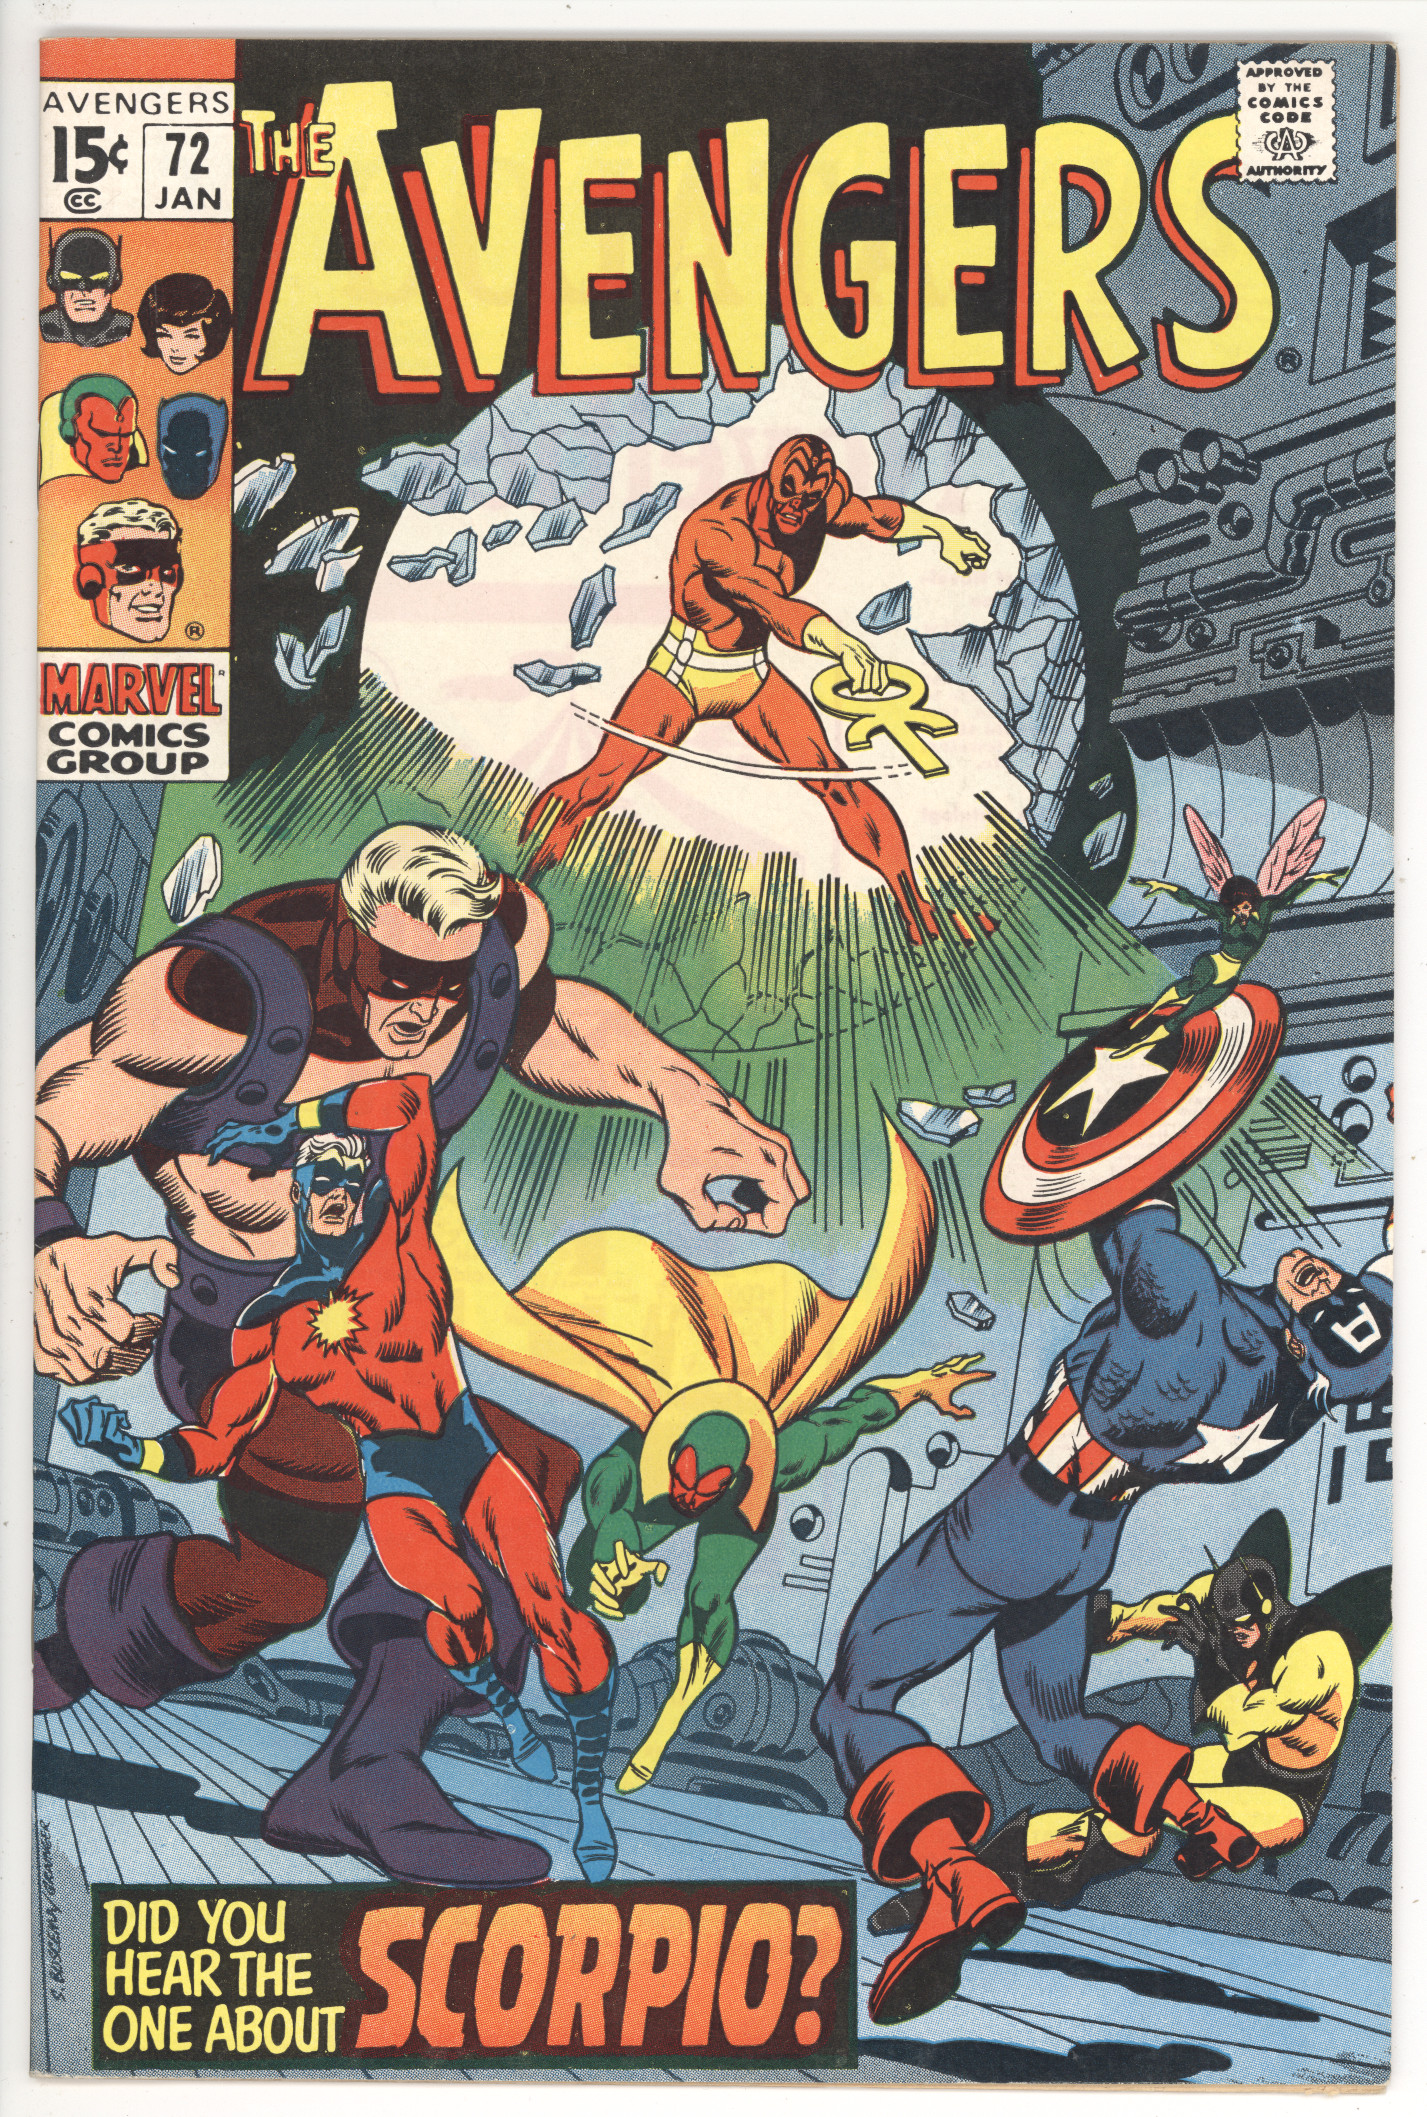 Avengers #72 front